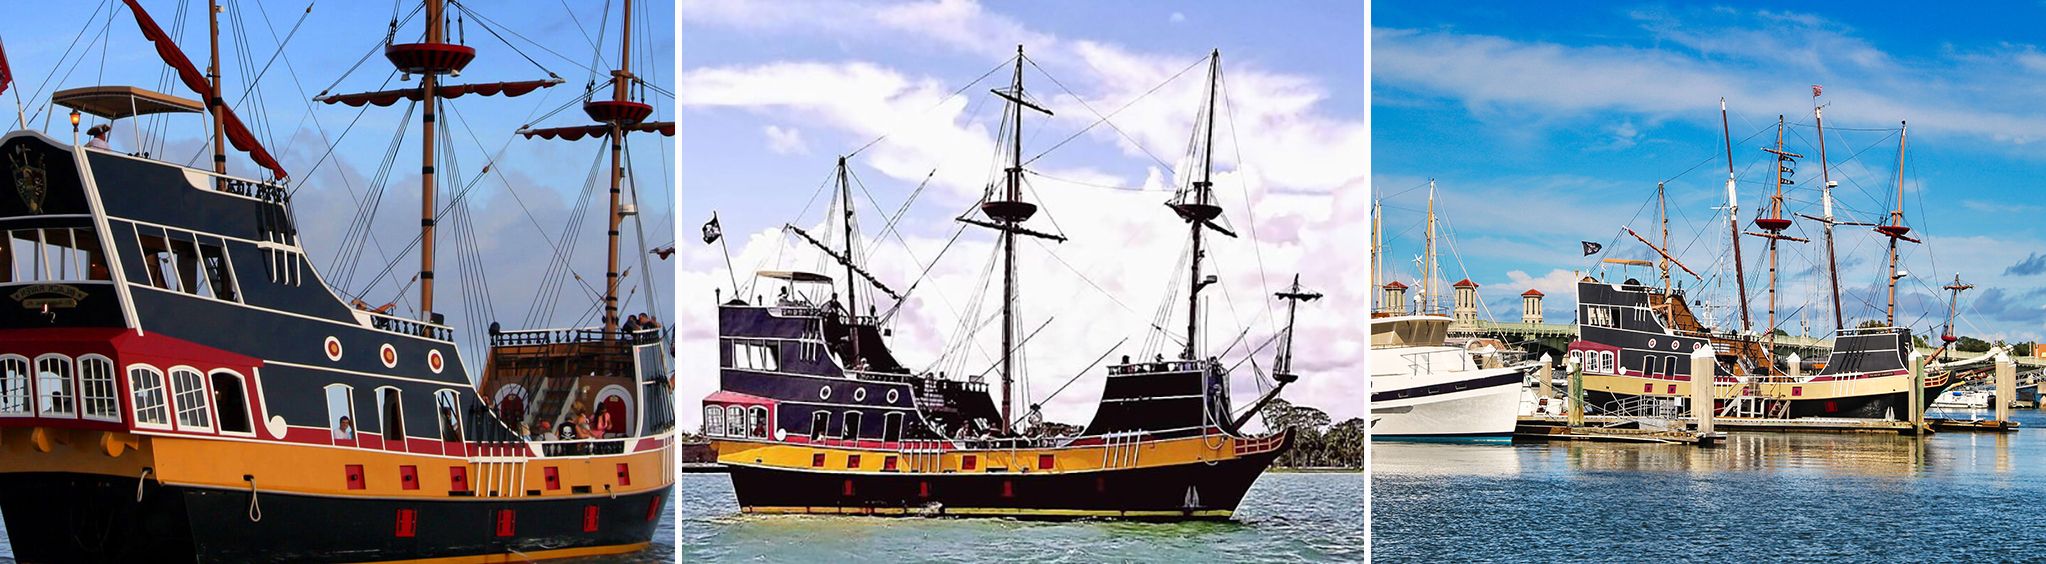 Black Raven Pirate Ship in St. Augustine, FL